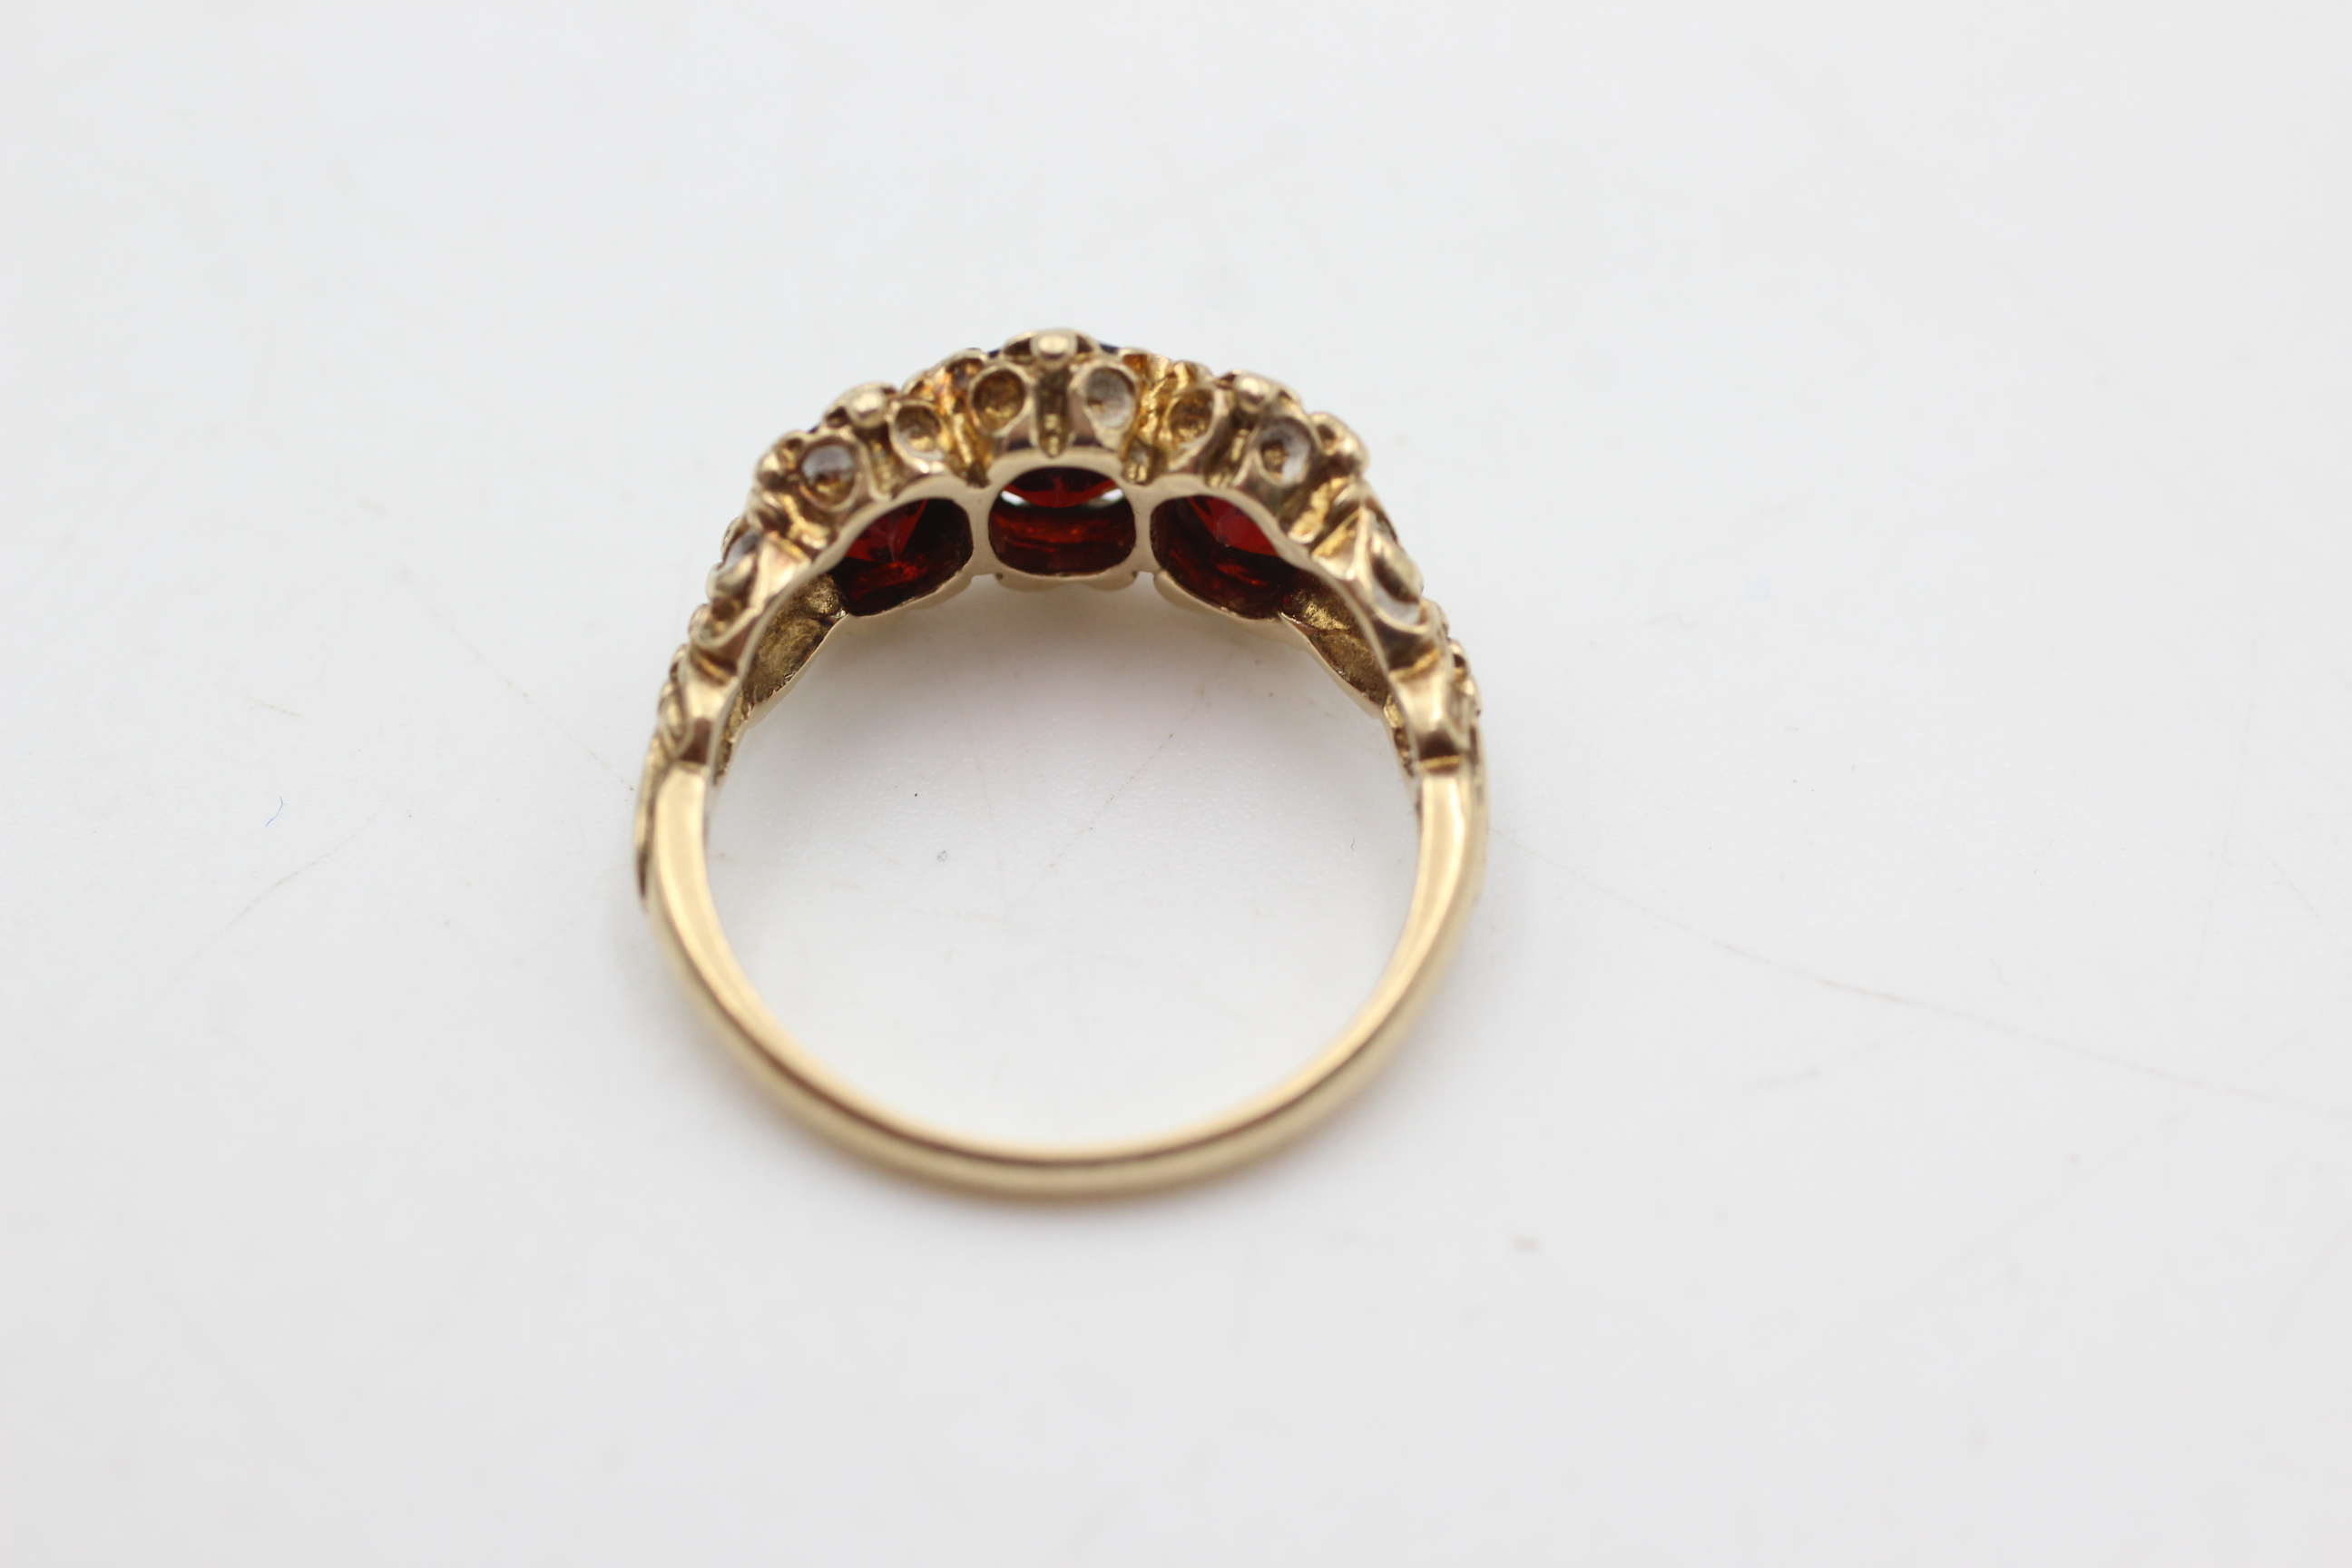 9ct gold garnet gypsy ring (3.8g) - Image 5 of 5